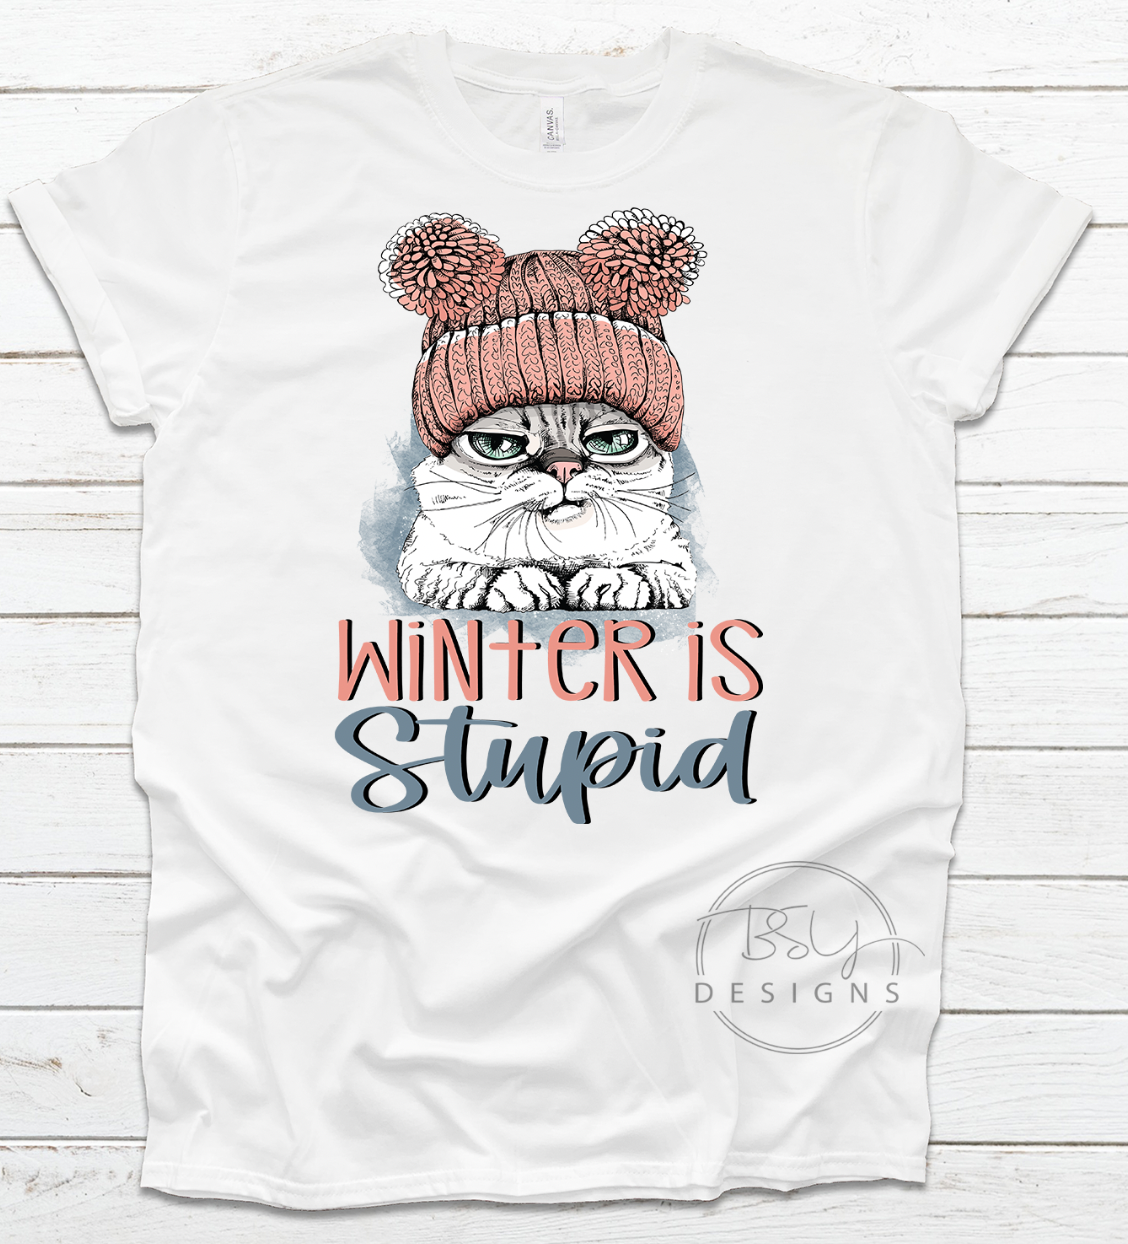 Winter is stupid